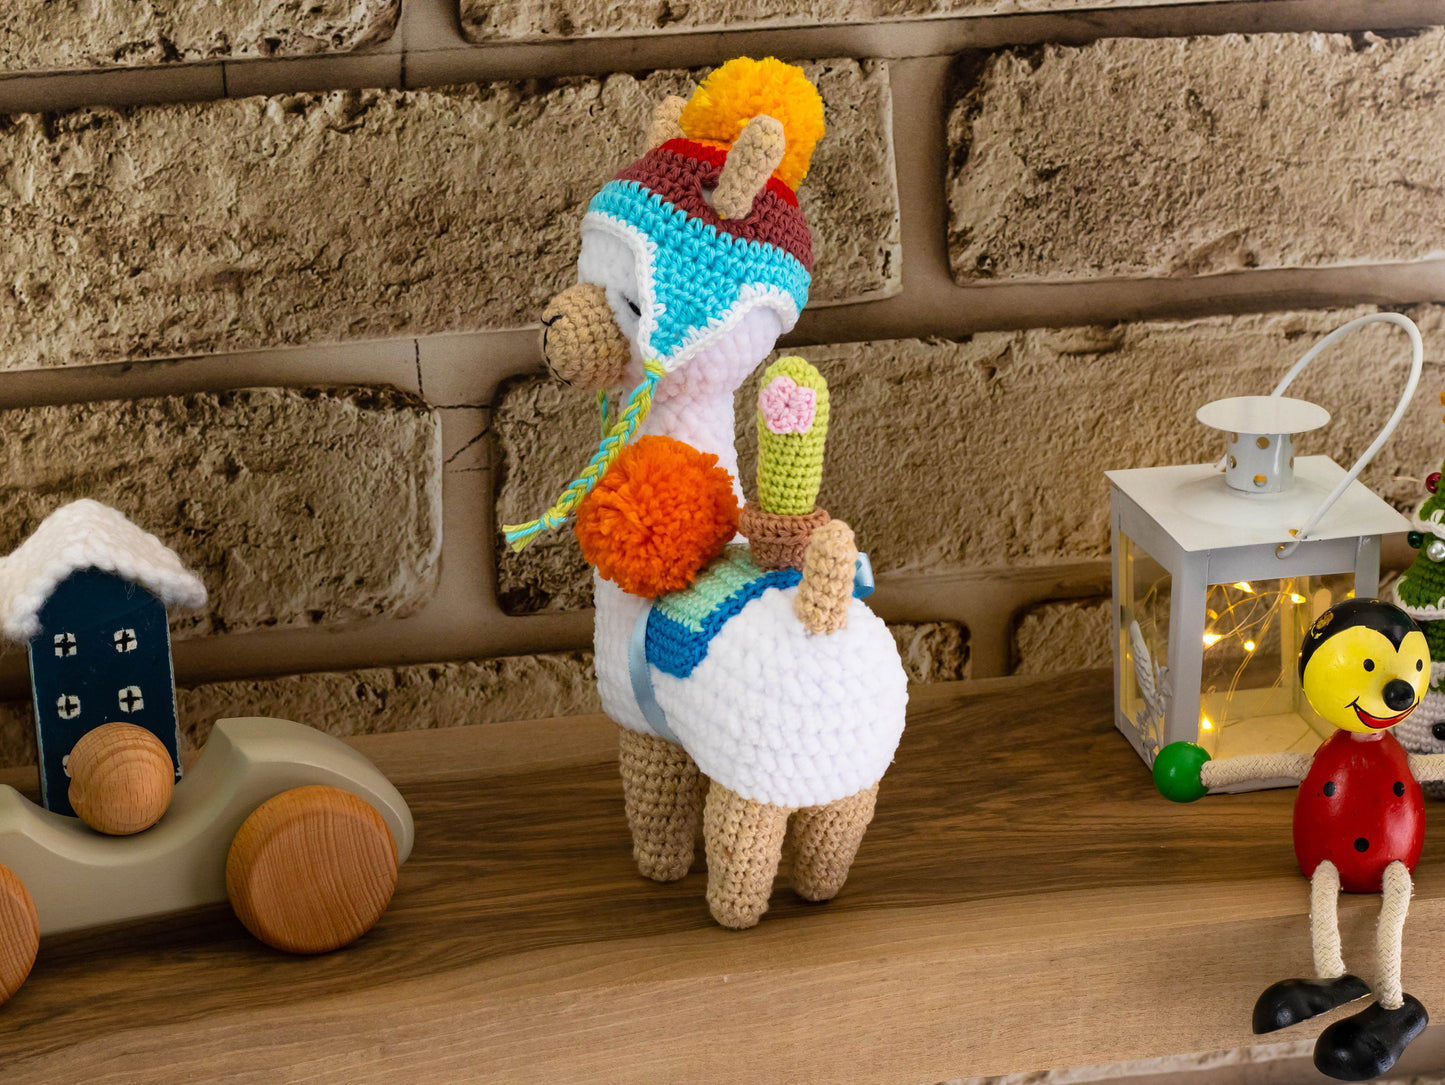 Crochet Llama, Llama Amigurumi, Crochet Llamas for Sale, Llama Nursery Decor, Llama Plush Toy, Crochet Alpaca, Llama Gifts for Kids Teachers